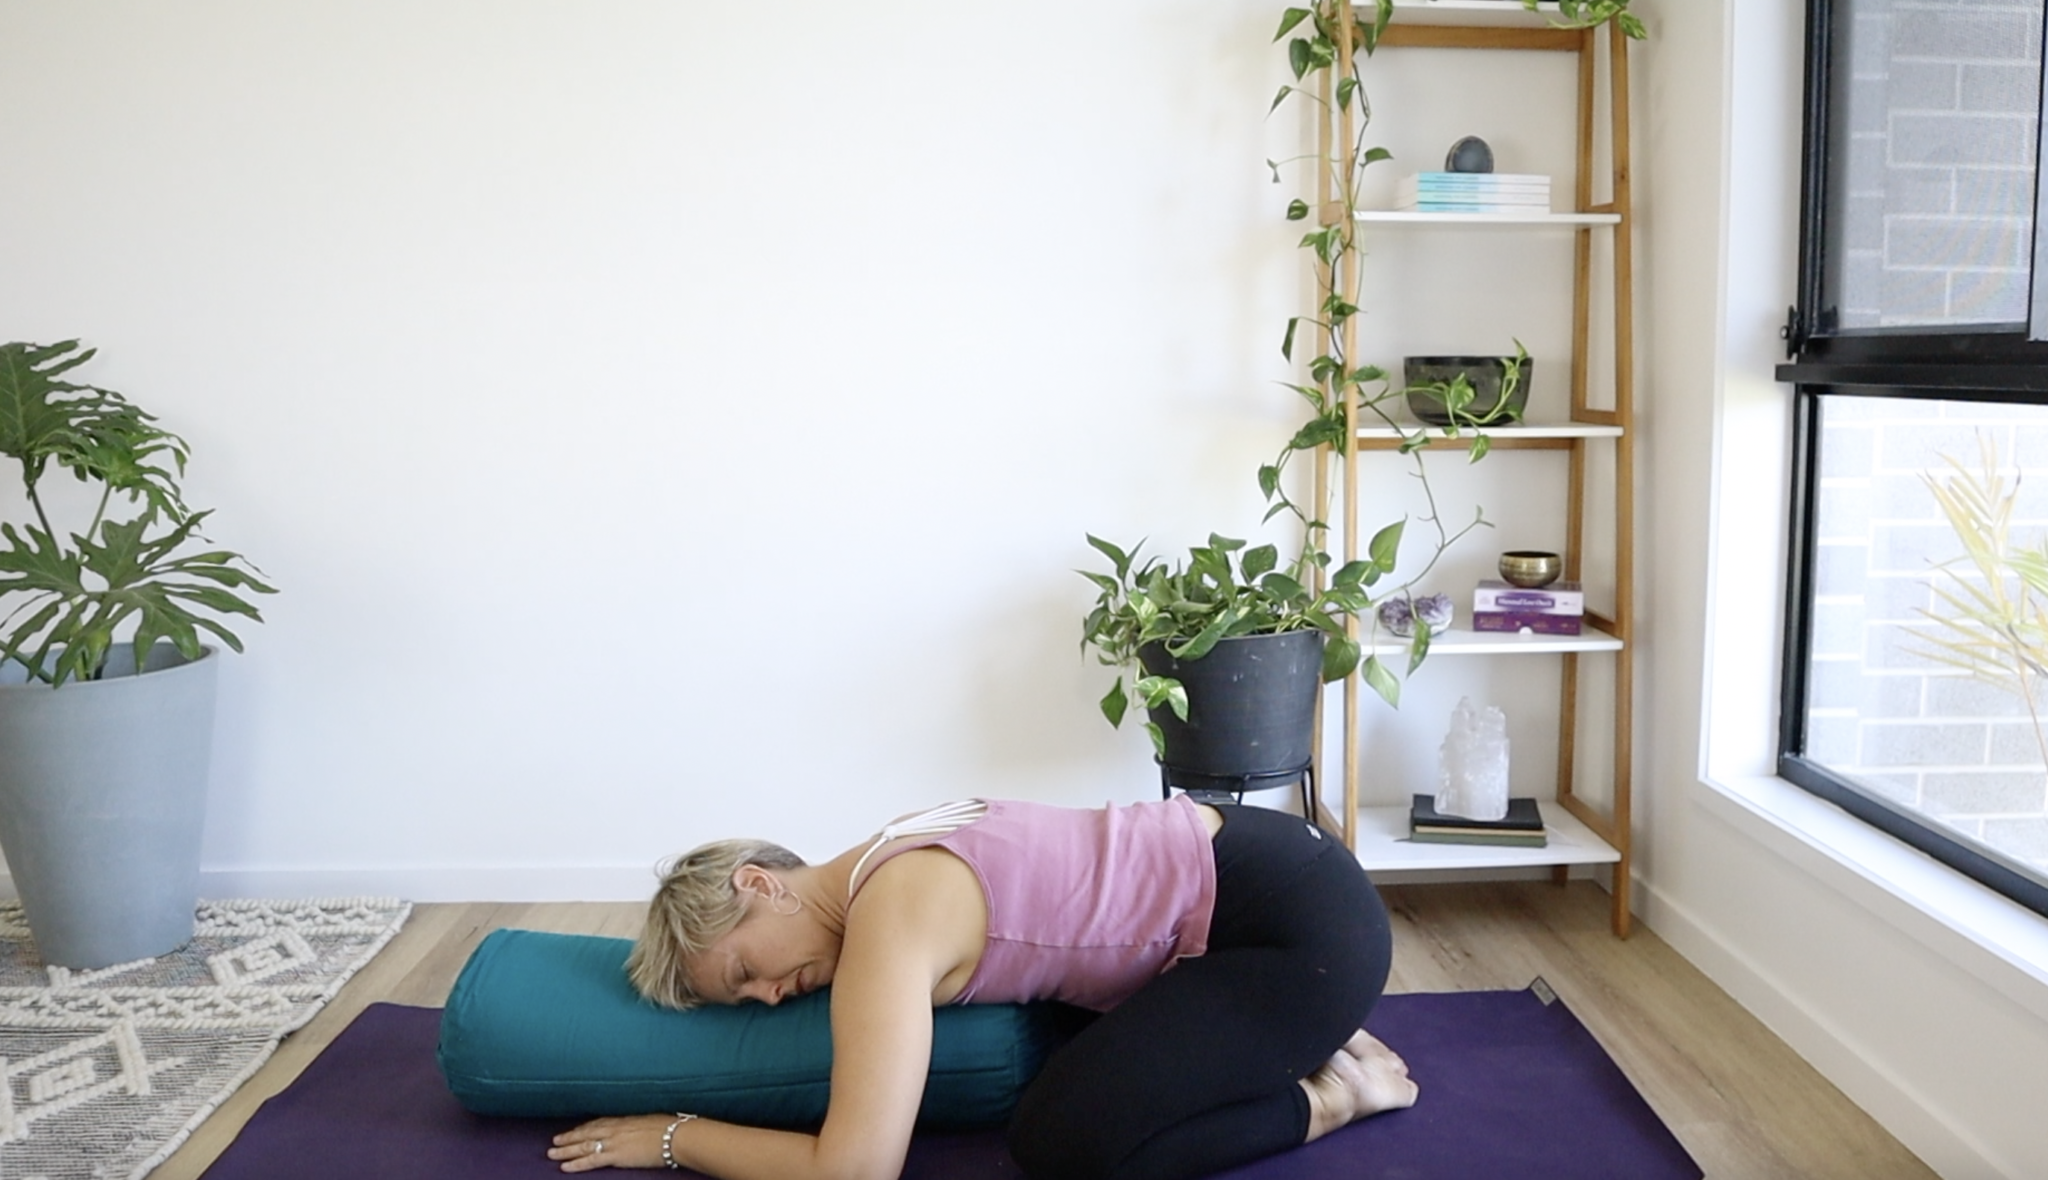 Best yoga poses for endometriosis